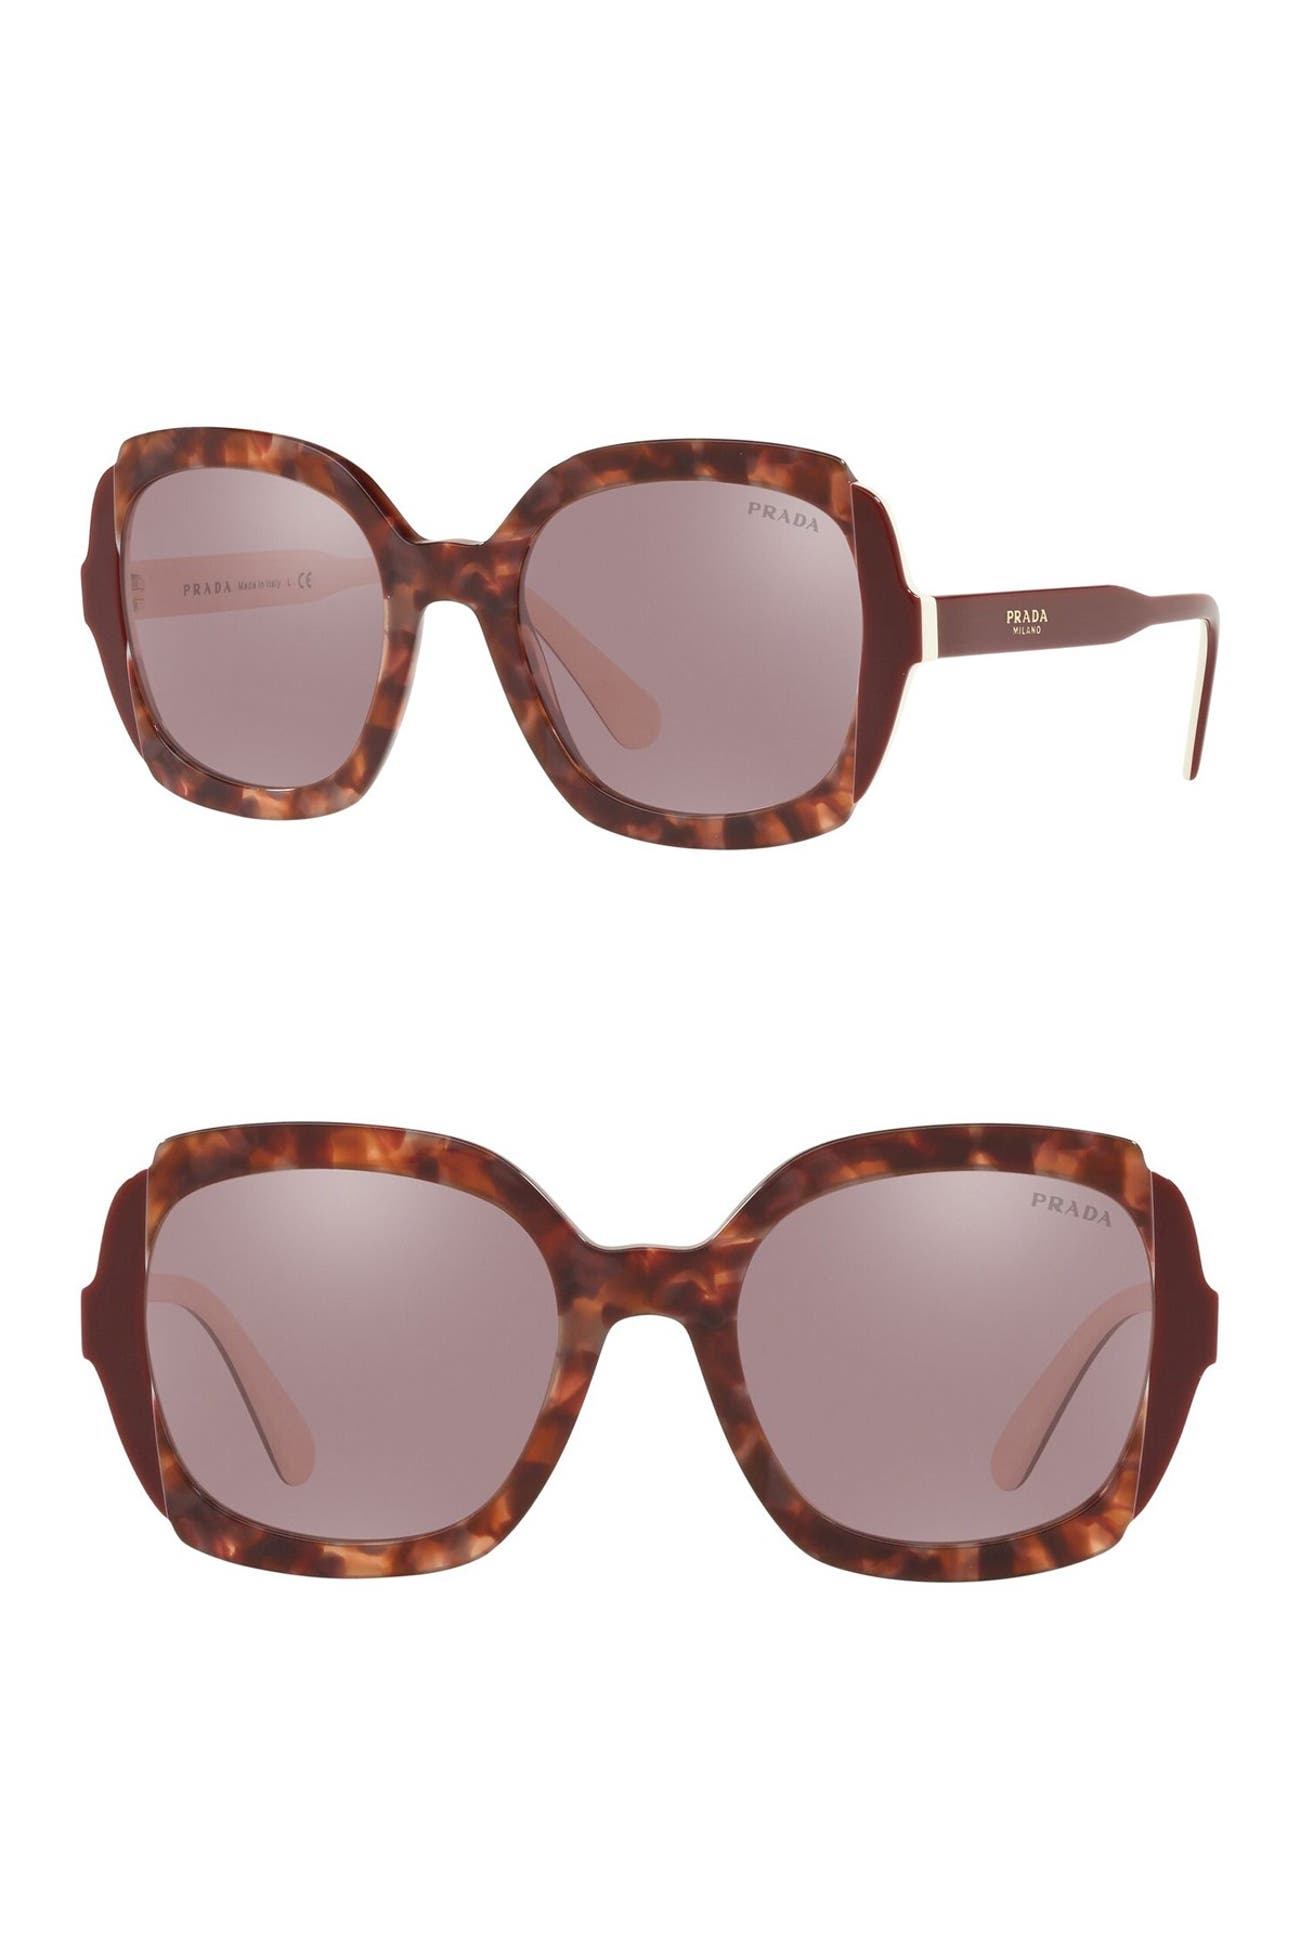 Prada | 54mm Square Sunglasses | Nordstrom Rack